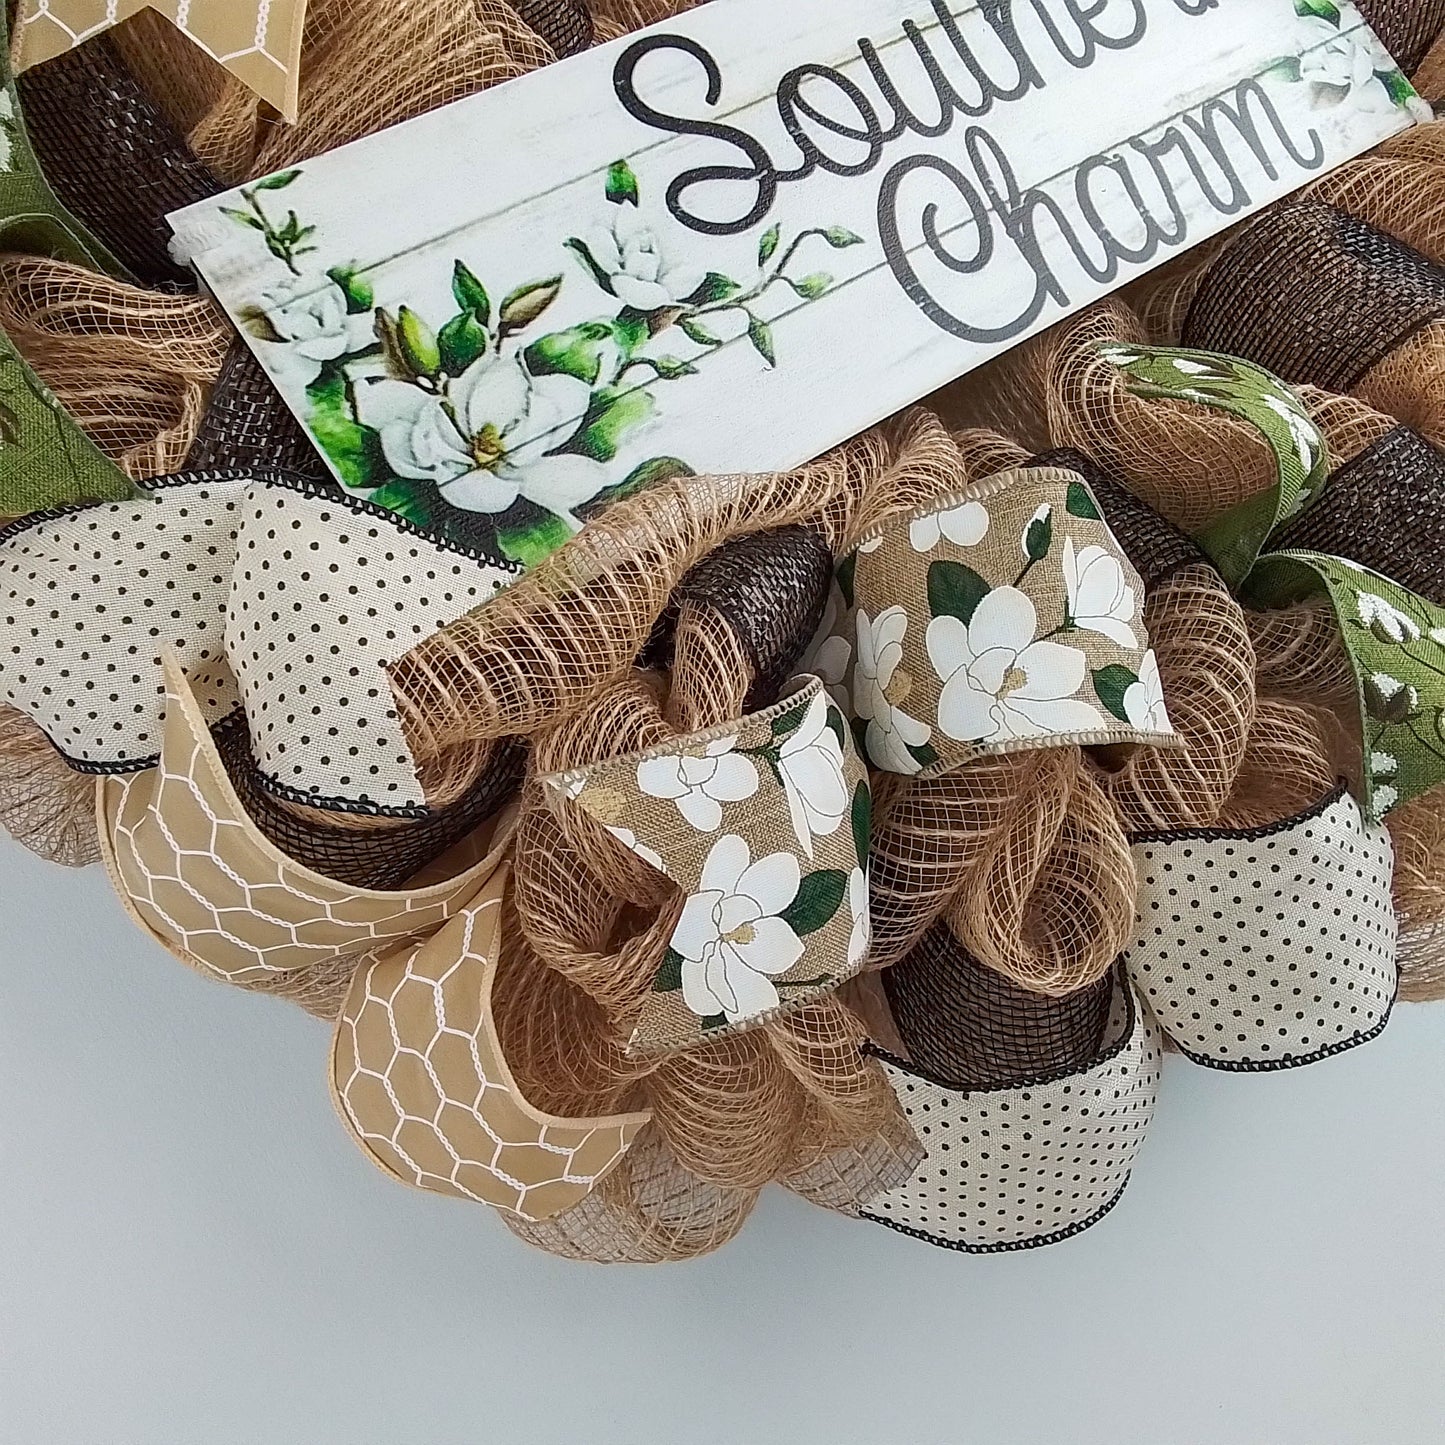 Southern Charm Magnolia Wreath - Black Green Spring Burlap Decor - Wedding Gift - Moss Burlap White